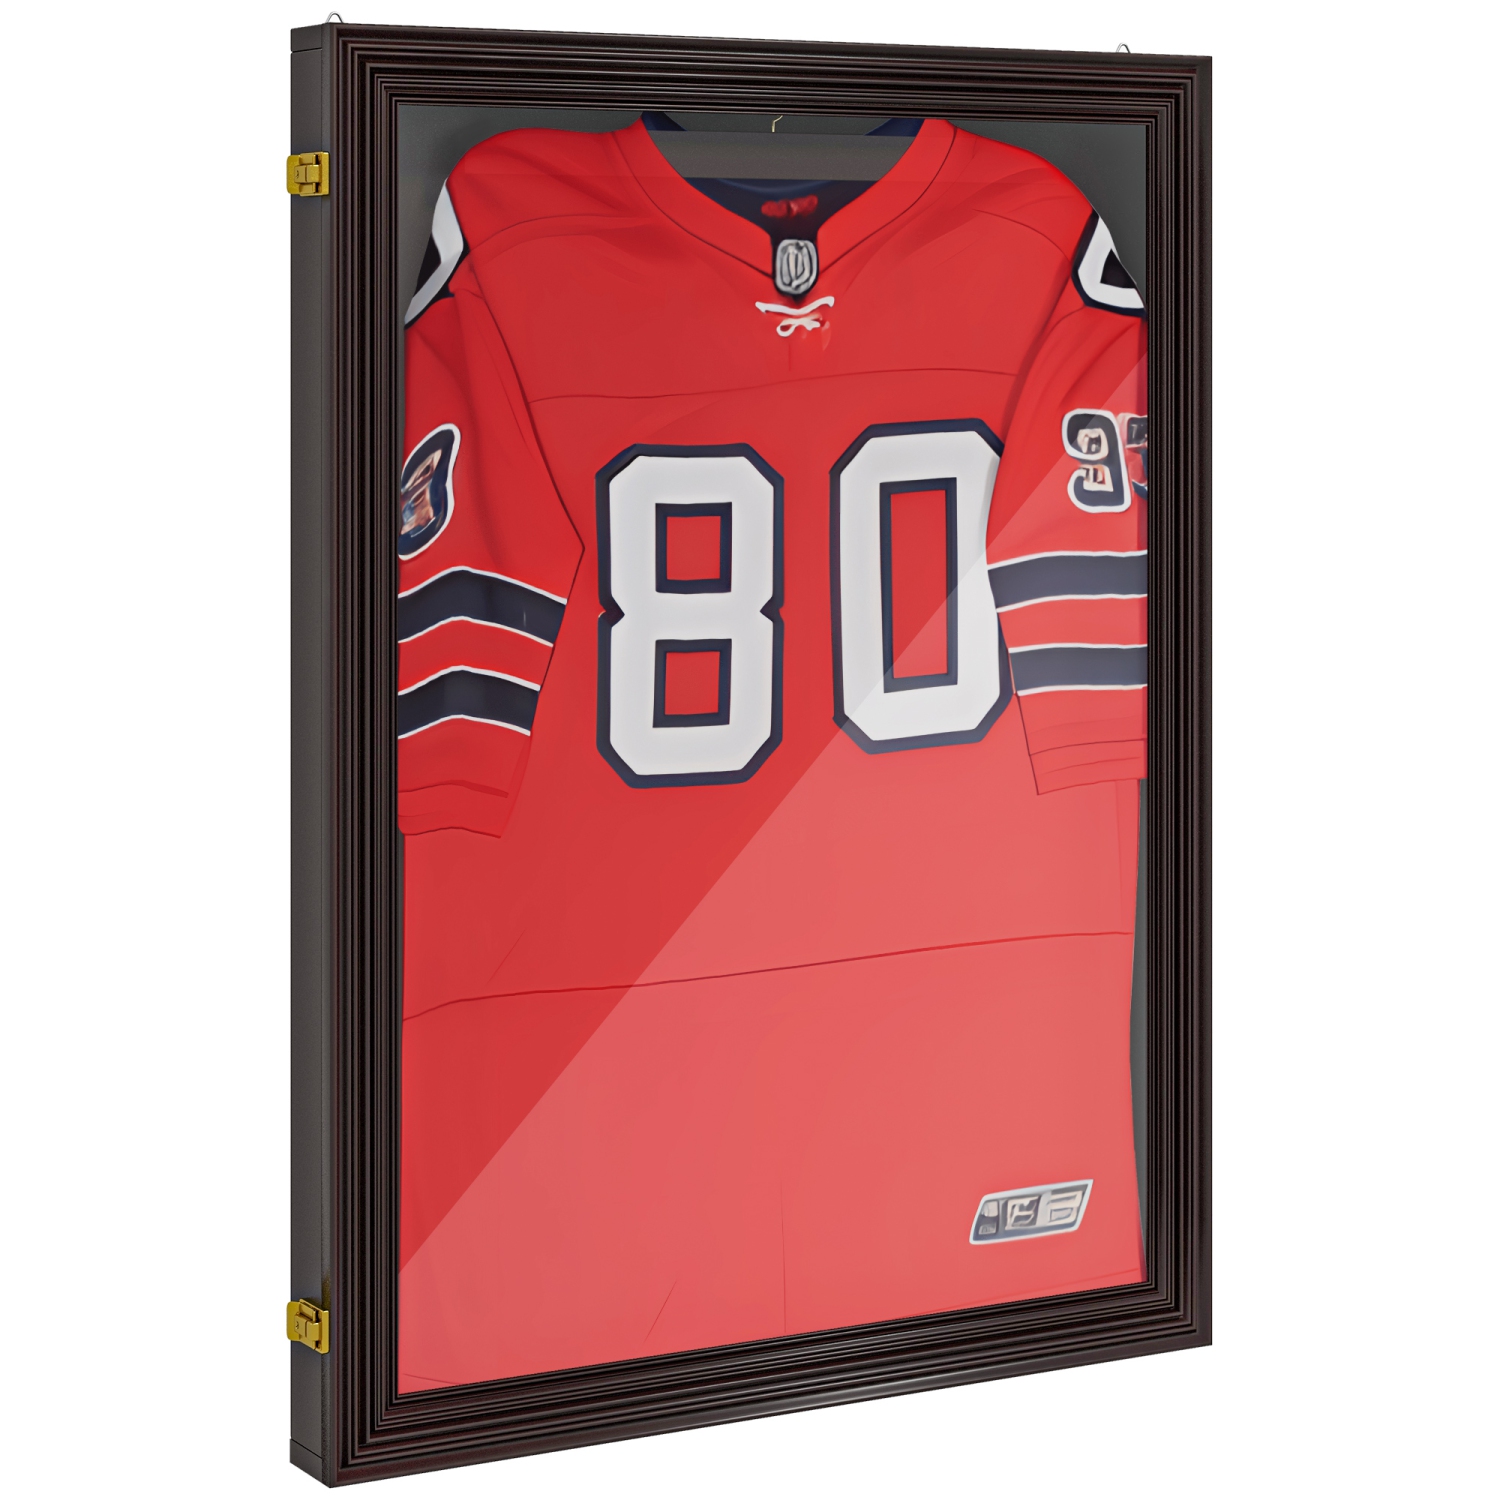 HOMCOM Jersey Display Frame Case, Acrylic Sports Shirt Shadow Box for Basketball Football Baseball, 26" x 35", Brown